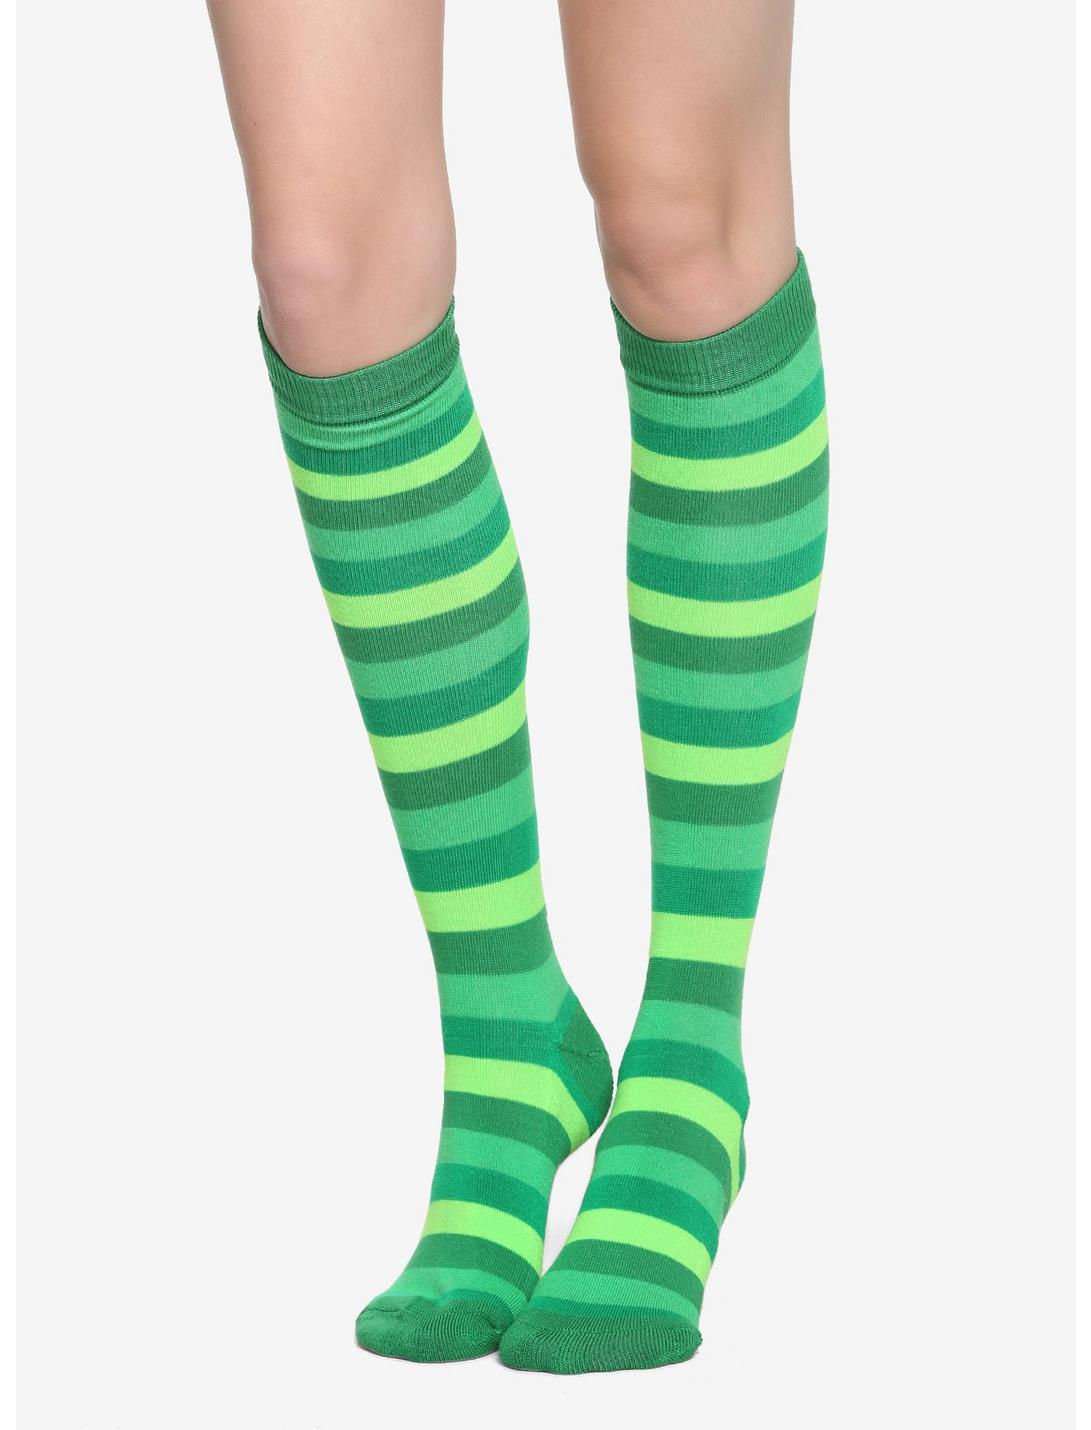 Green Striped Knee-High Socks, , hi-res